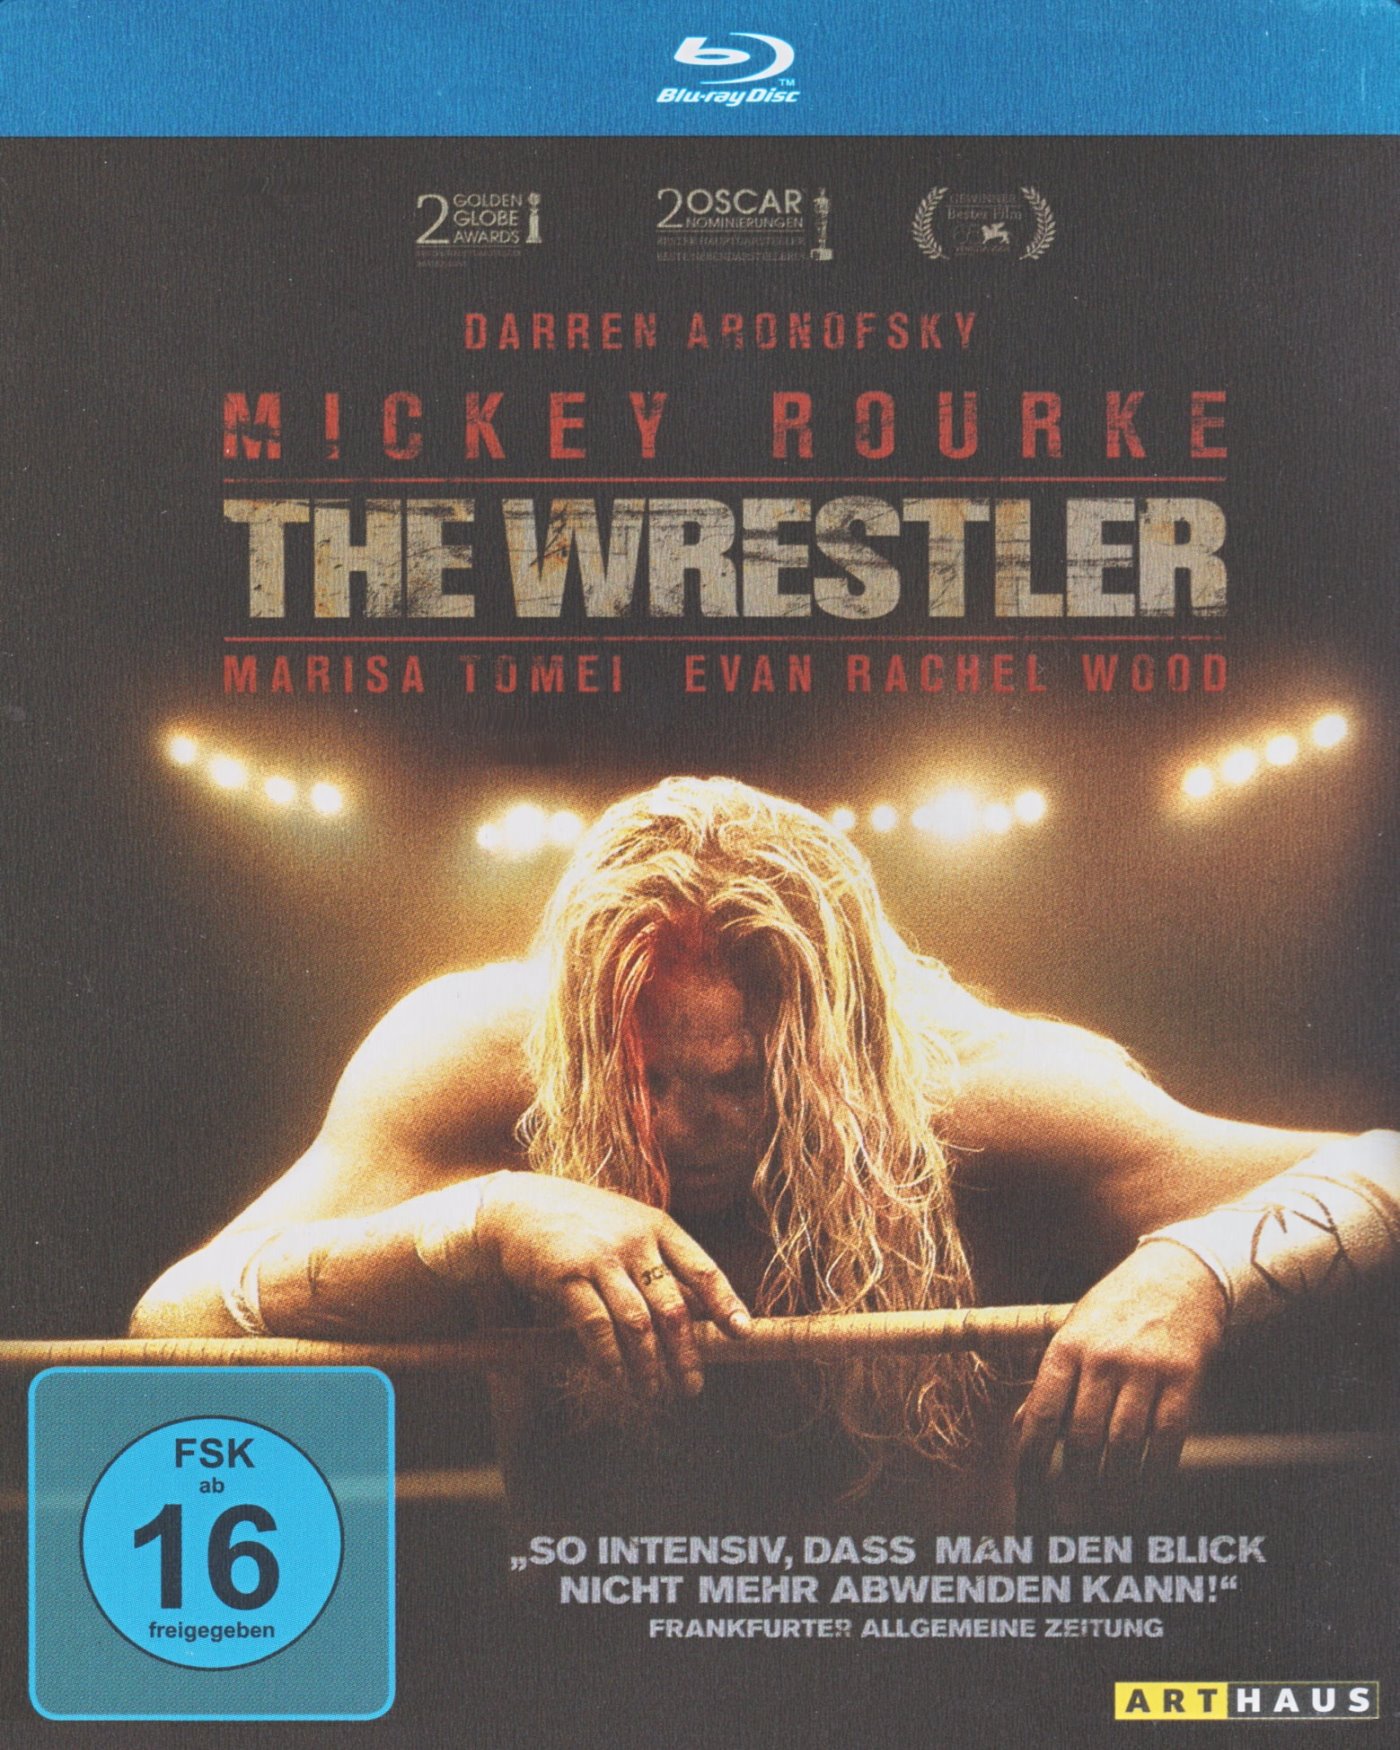 Cover - The Wrestler - Ruhm, Liebe, Schmerz.jpg